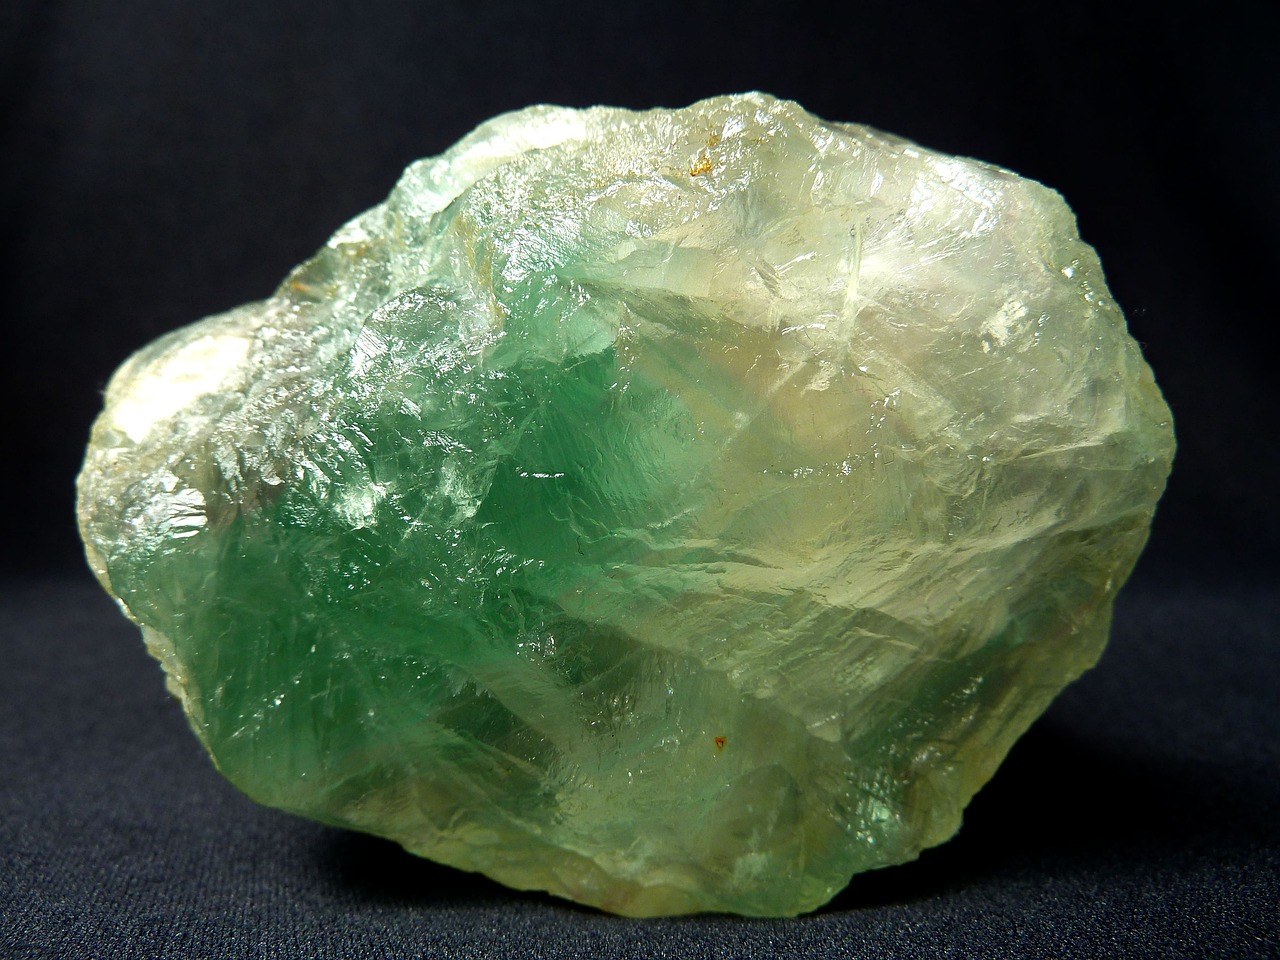 A fluorspar (calcium fluorite) crystal